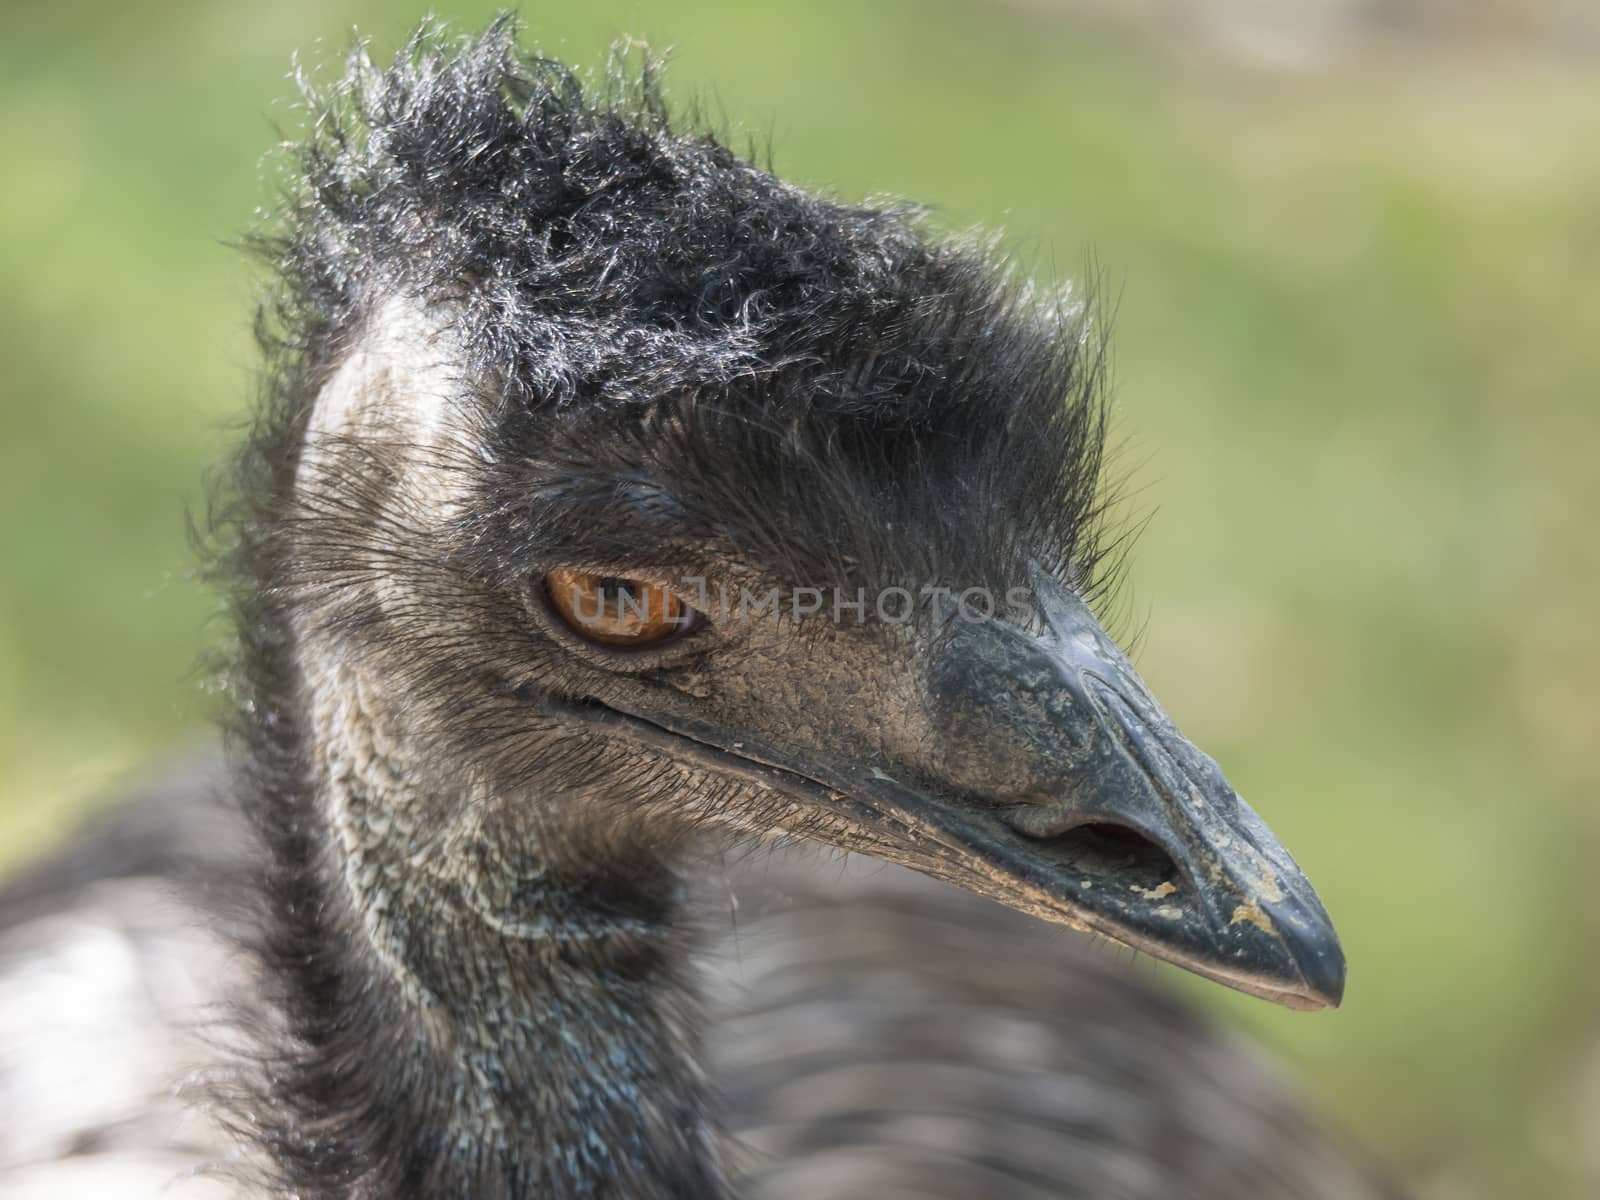 Close up profile portrait, head shot of Australian Emu,Dromaius novaehollandiae, Blurred, natural, bokeh background, Second largest bird on the world. Photography nature and animal wildlife